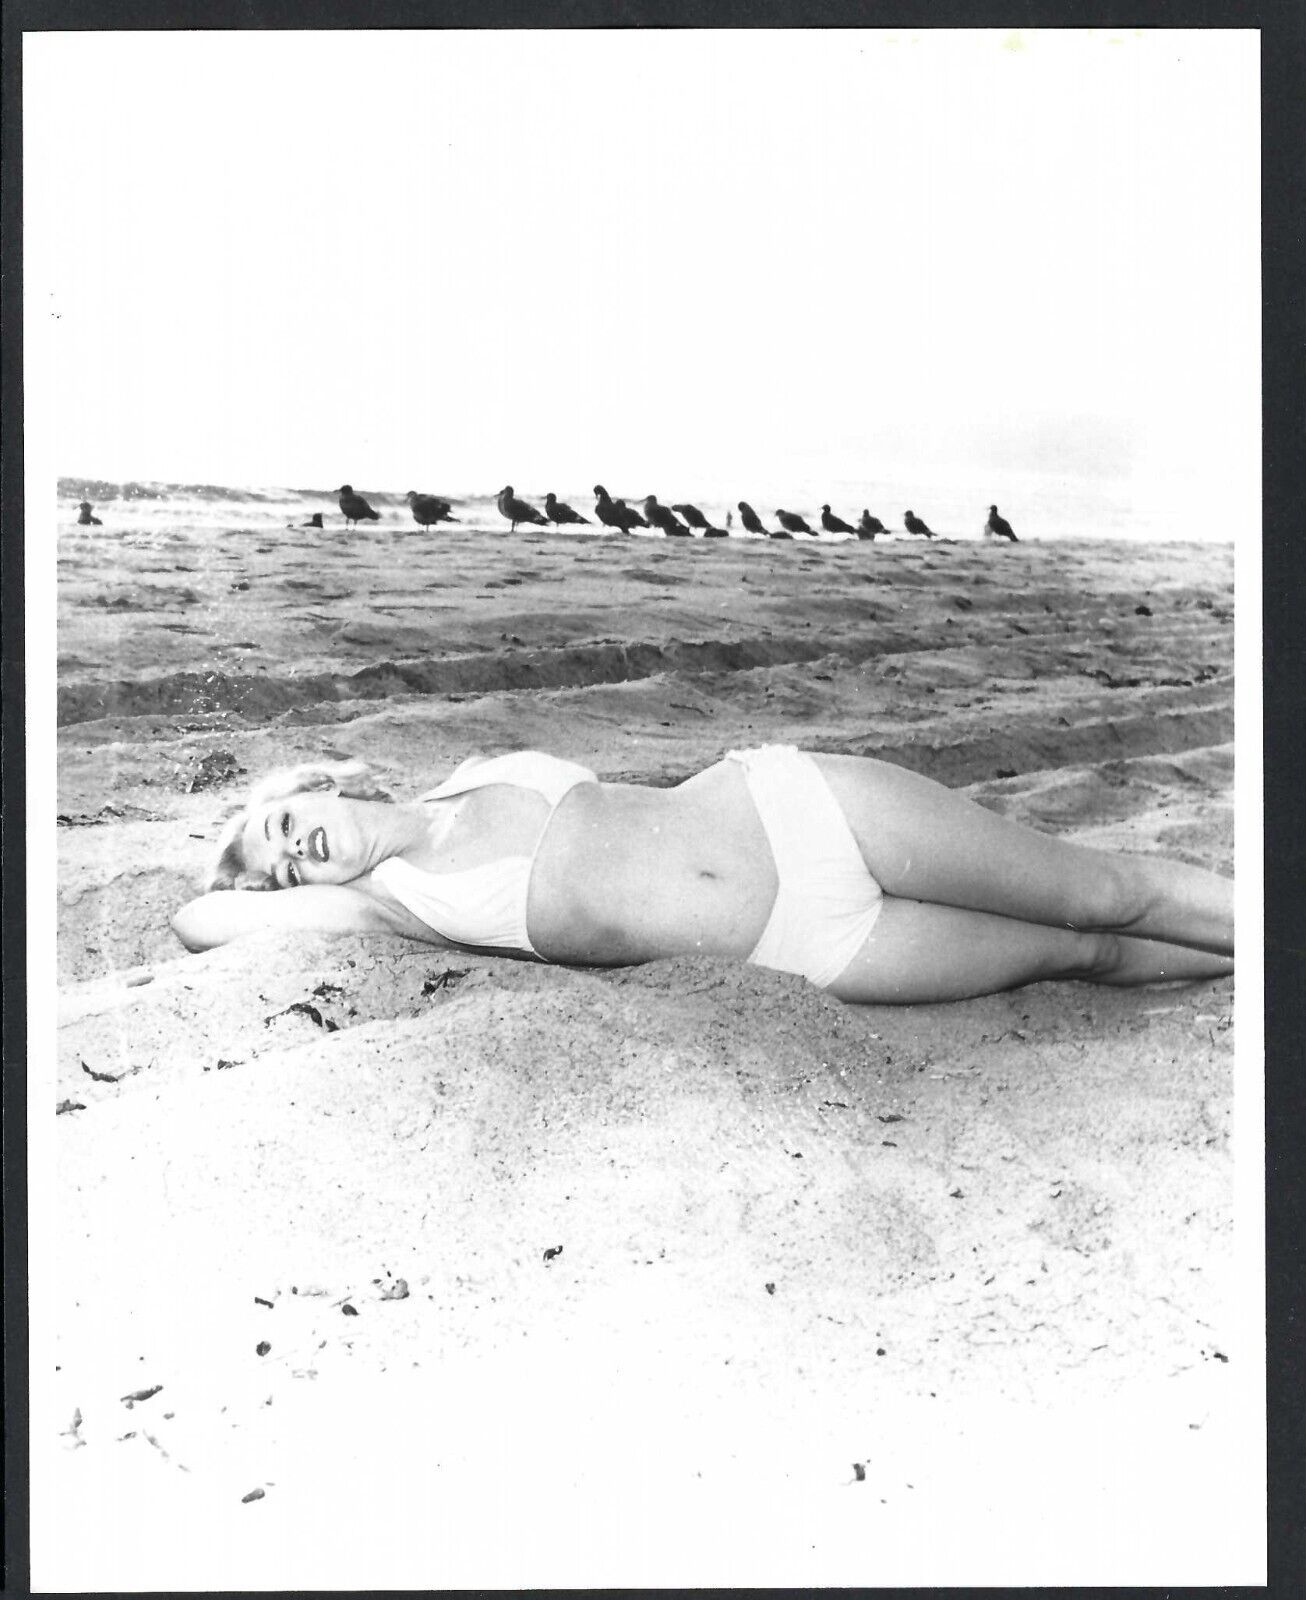 HOLLYWOOD MARILYN MONROE ACTRESS AT THE BEACH VINTAGE ORIGINAL PHOTO